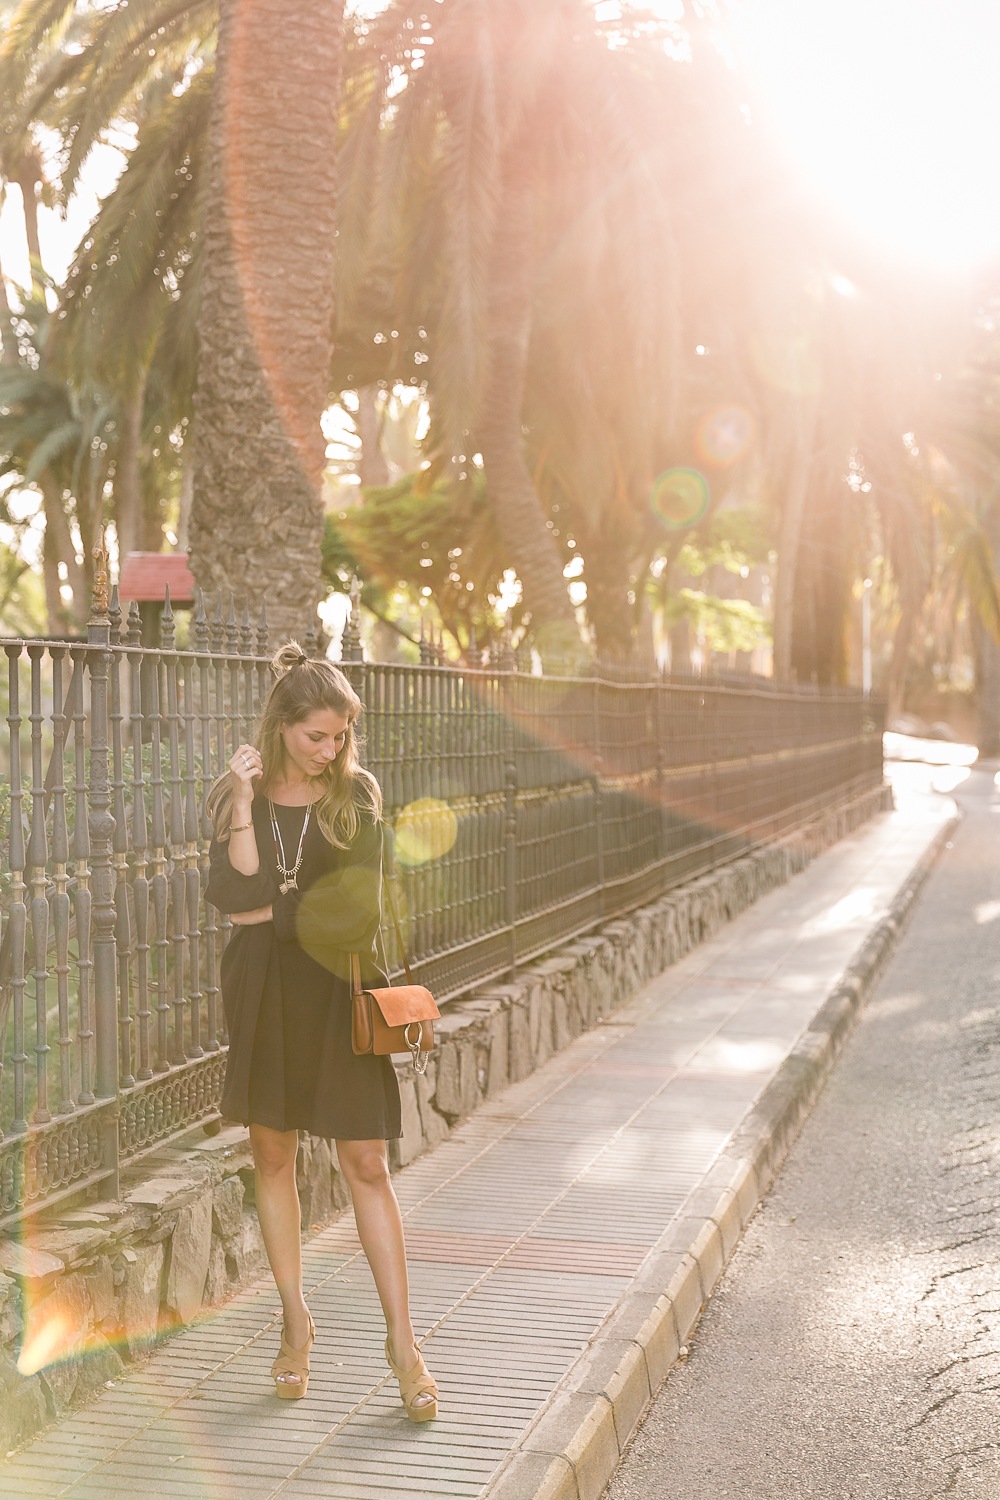 black dress summer outfit fashion blog platform sandals long necklace brown bag chloe chic style